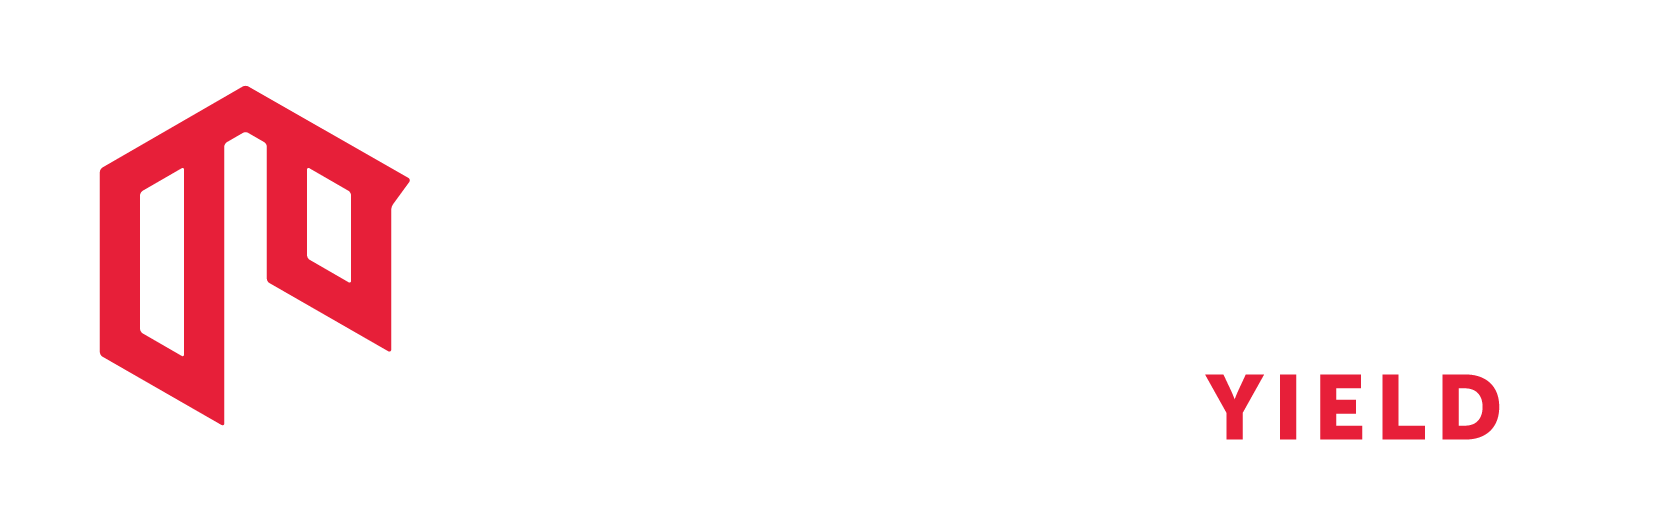 Relevant_yield_logo-1